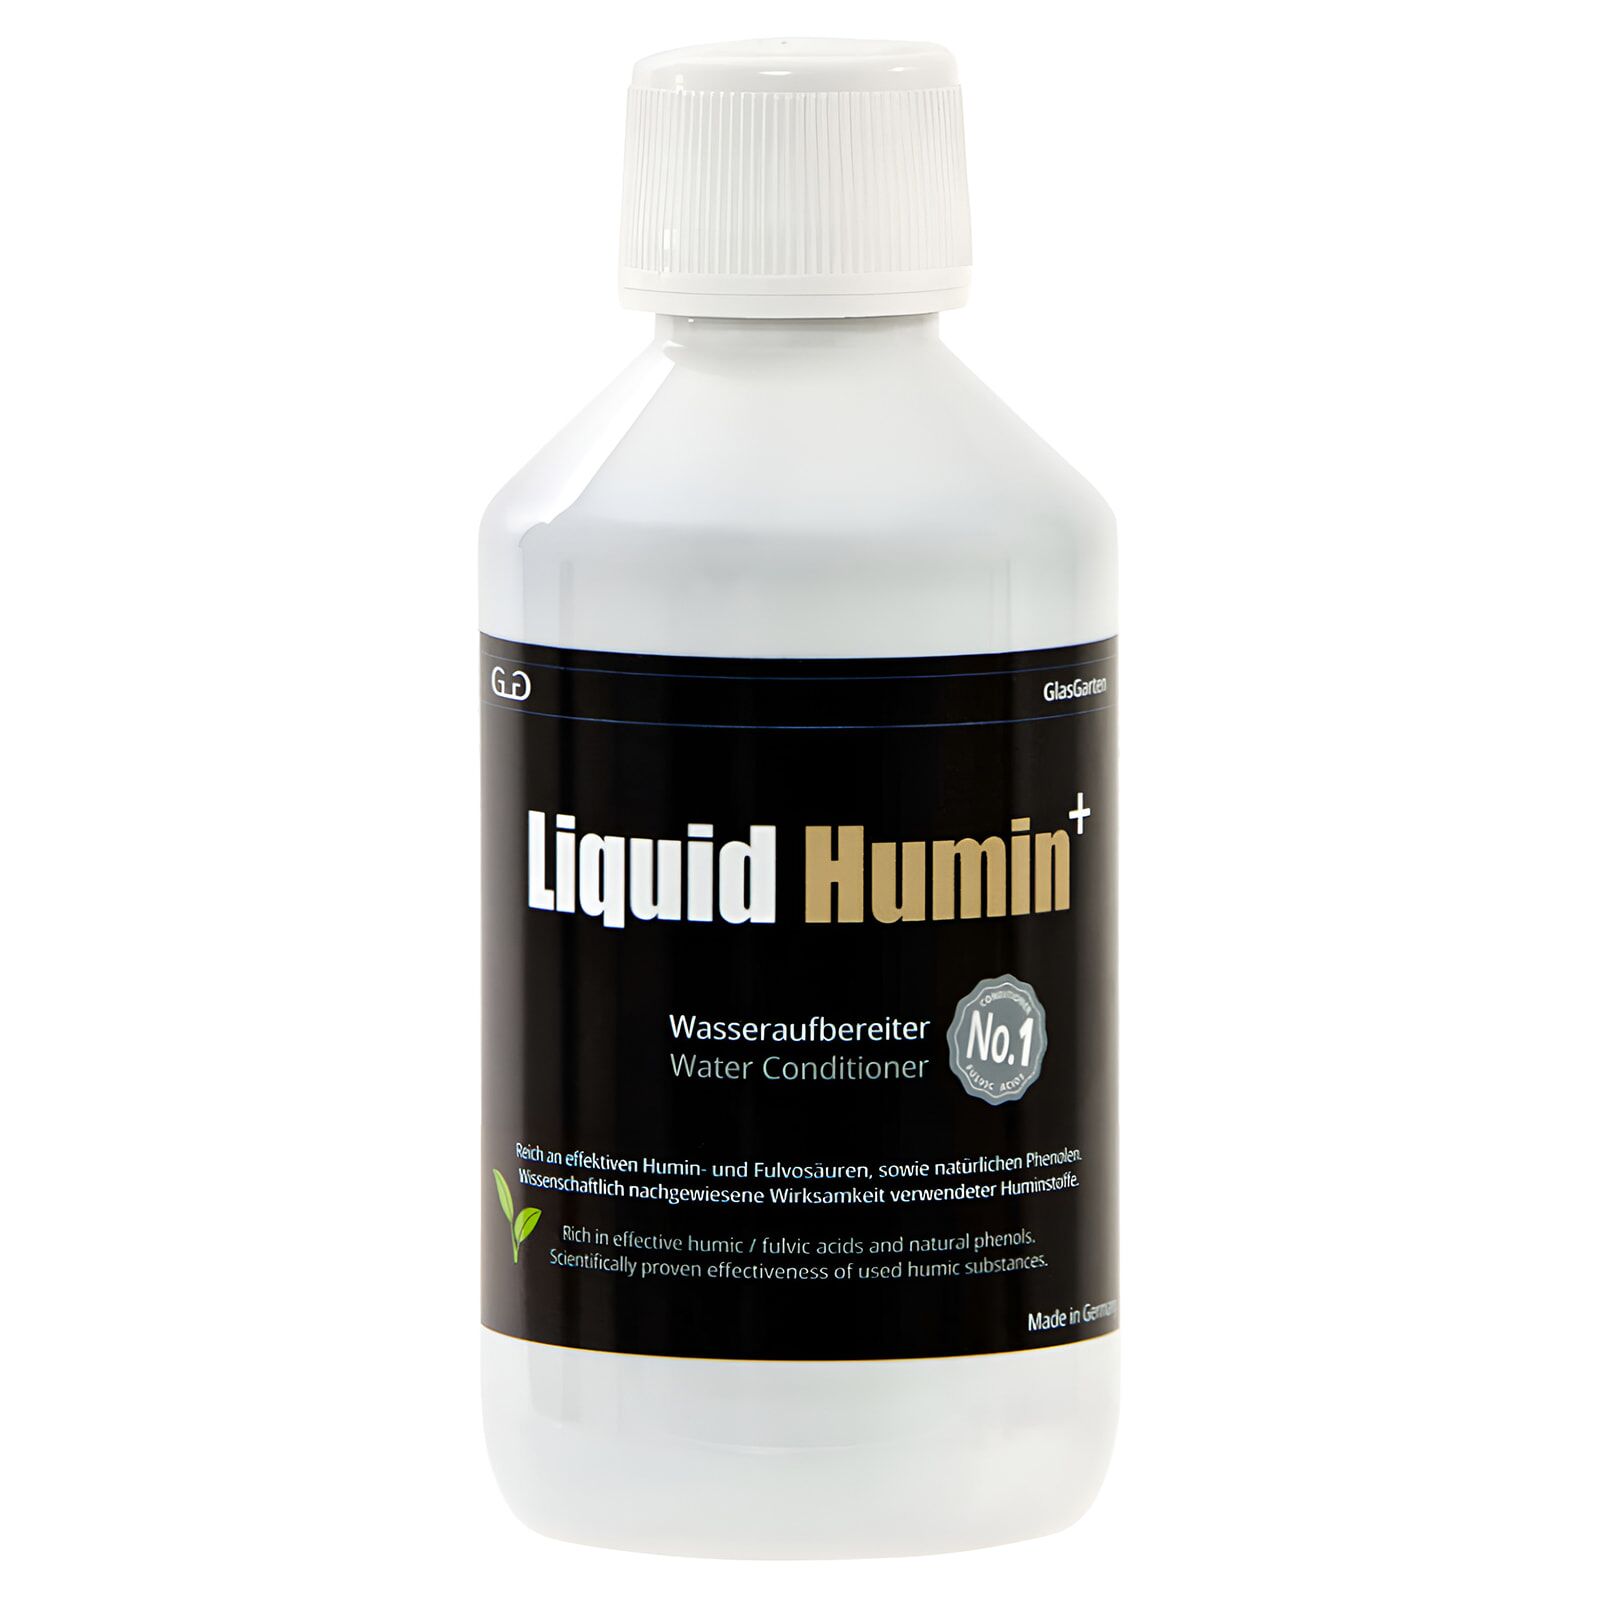 GlasGarten - Liquid Humin+